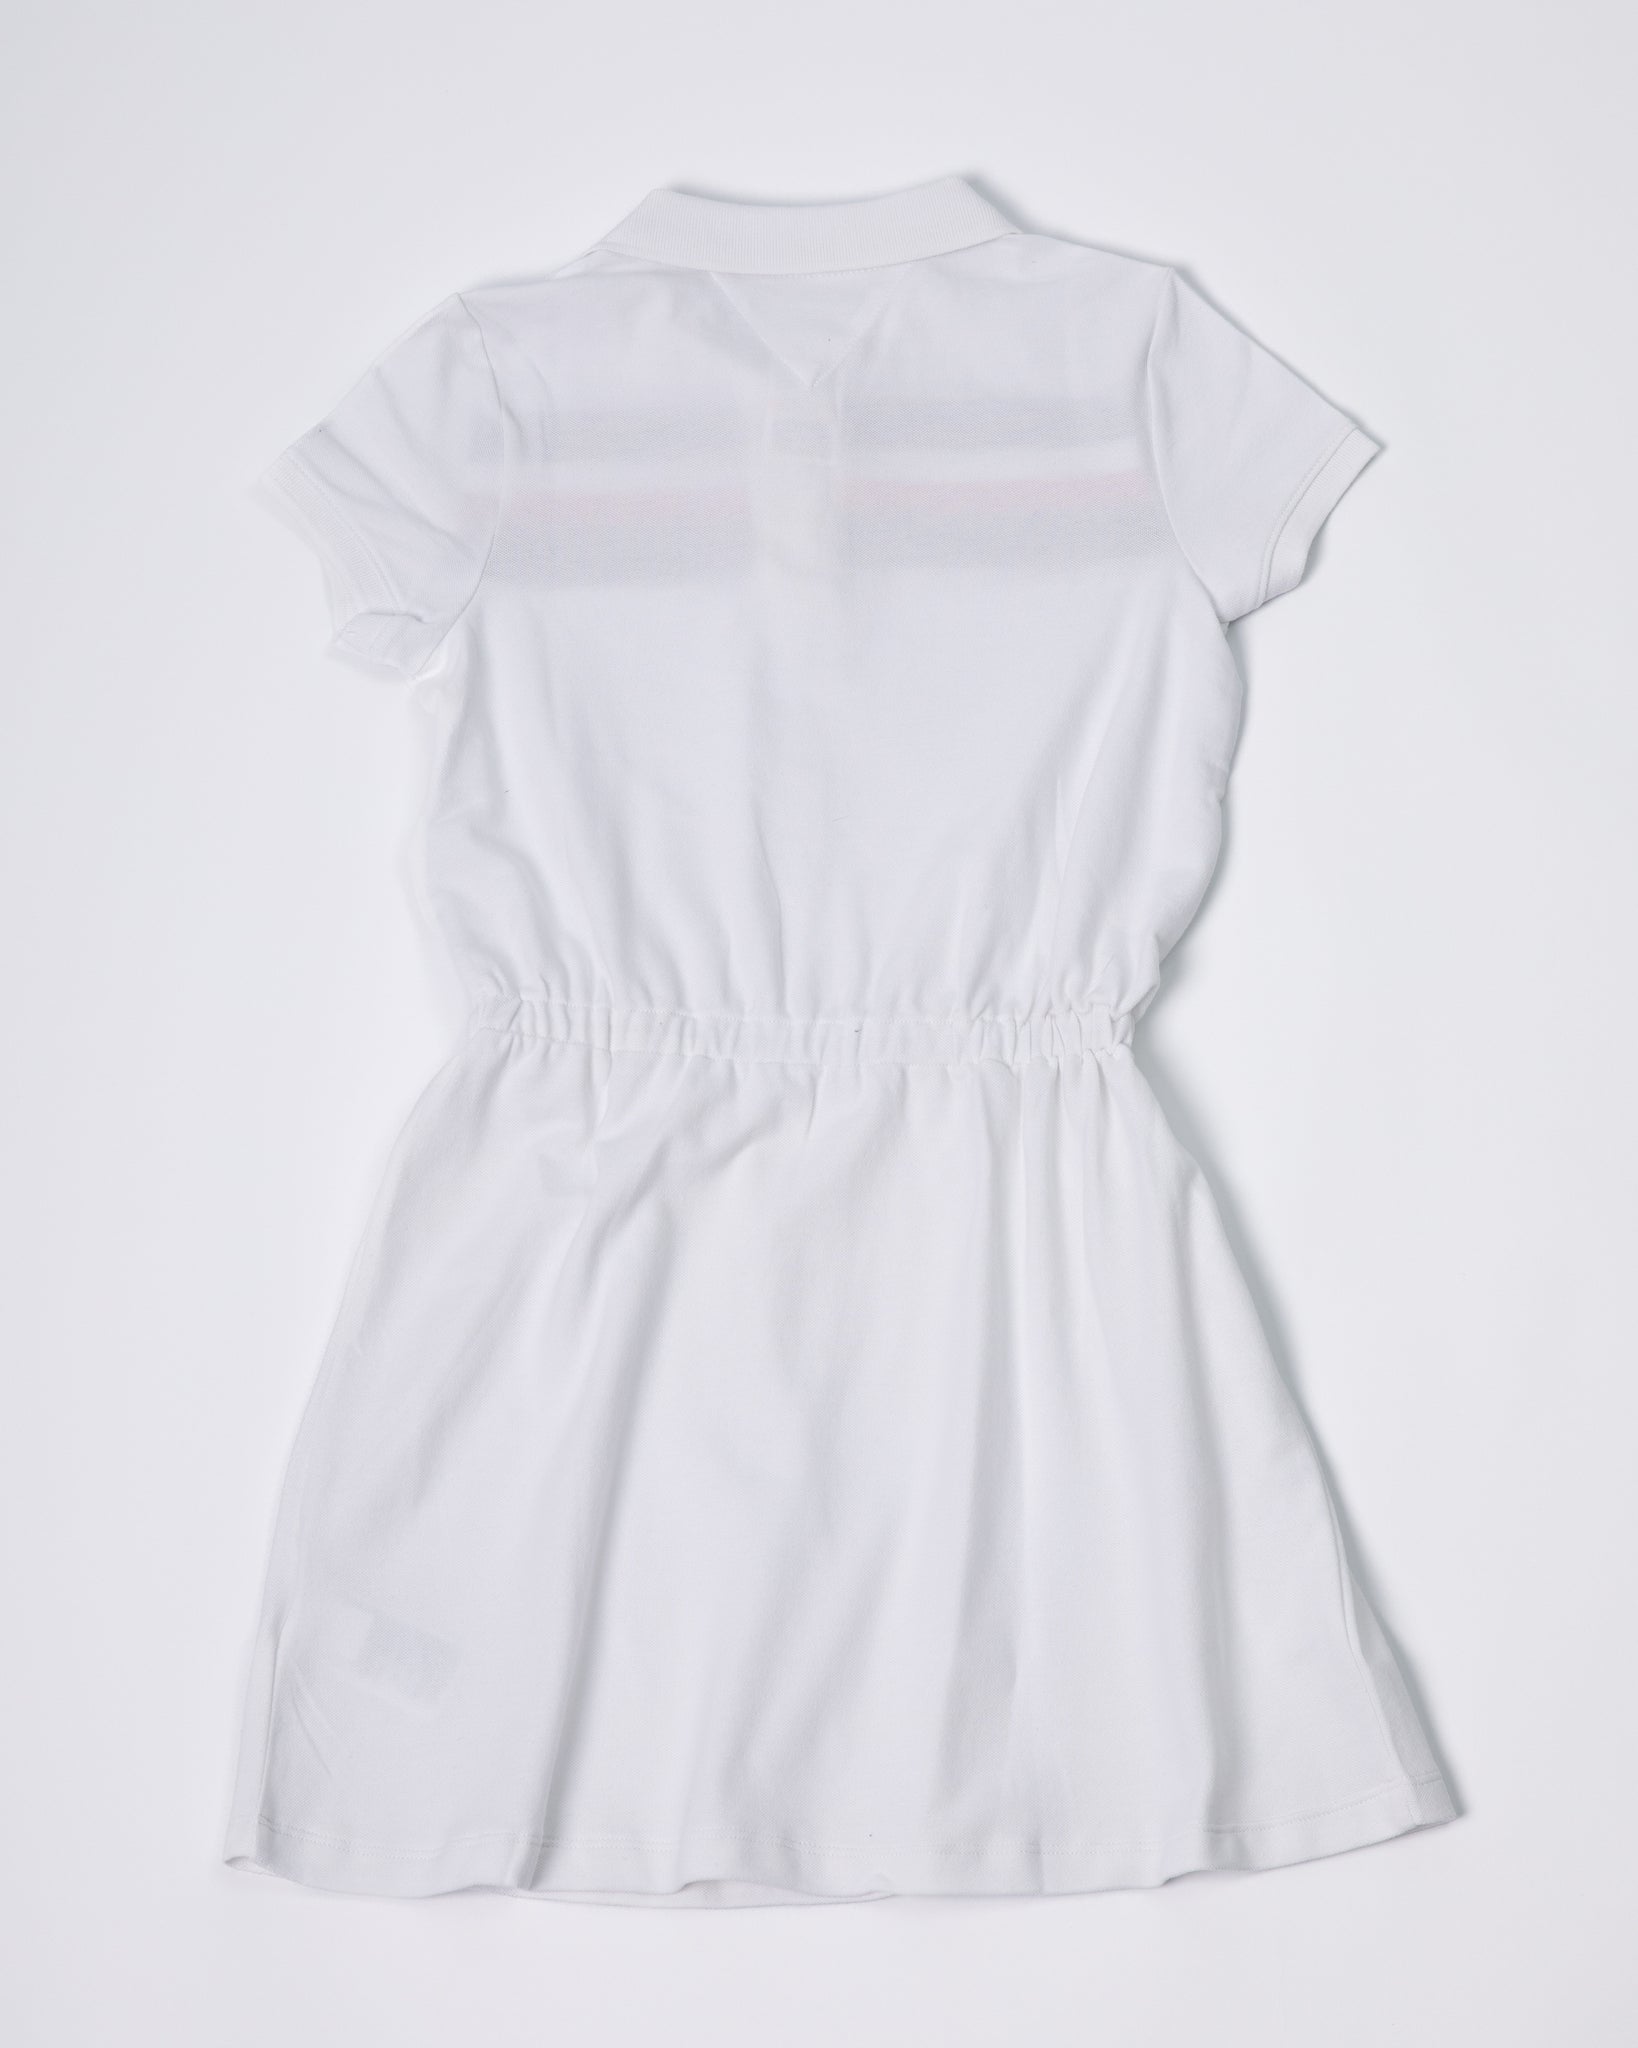 Pique Dress (Kids) - White